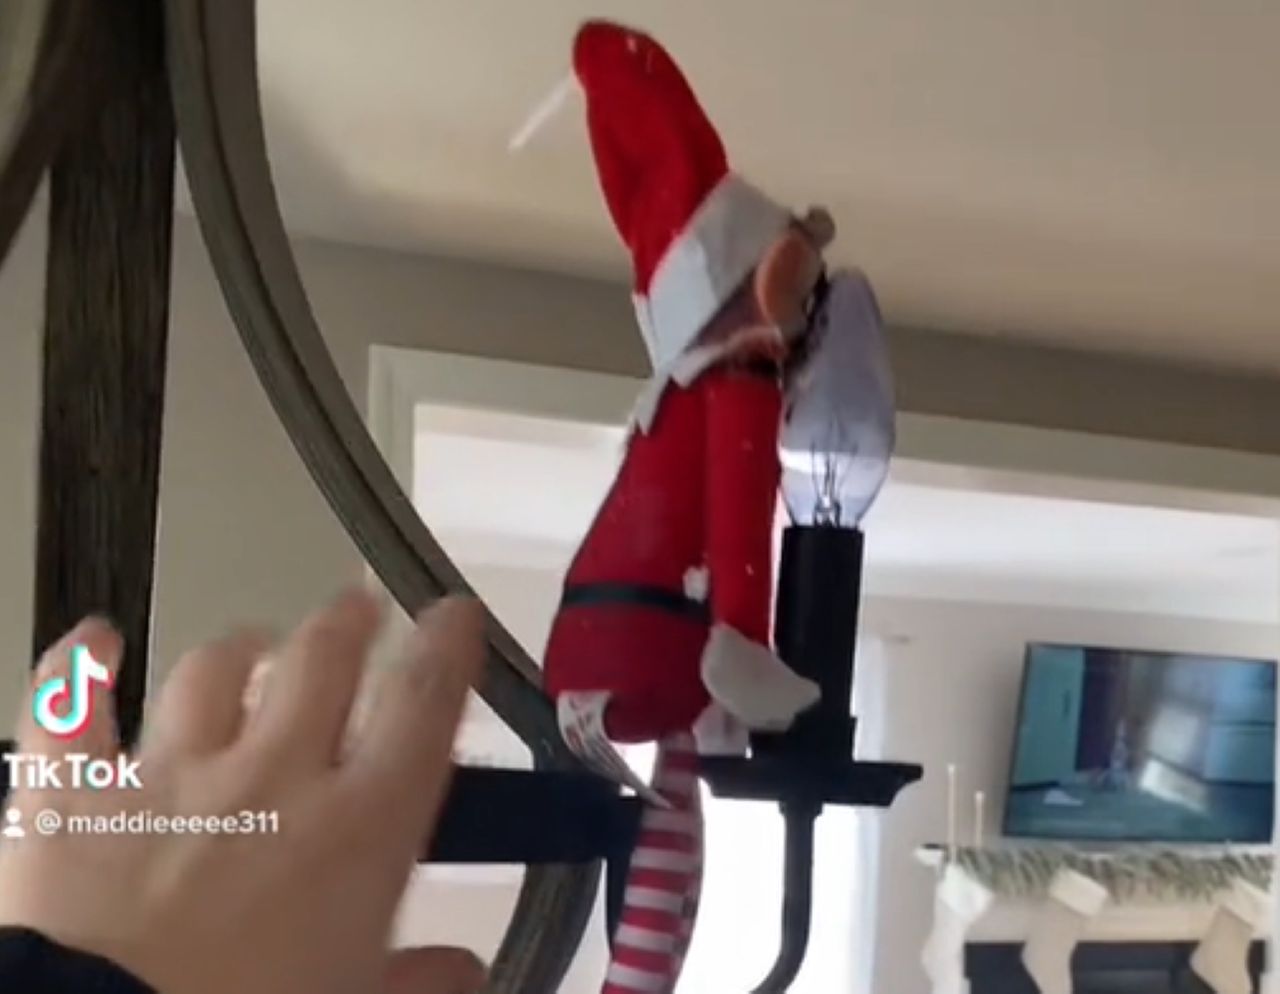 Elf on the shelf prank goes awry. TikToker reveals how holiday fun nearly led to fire